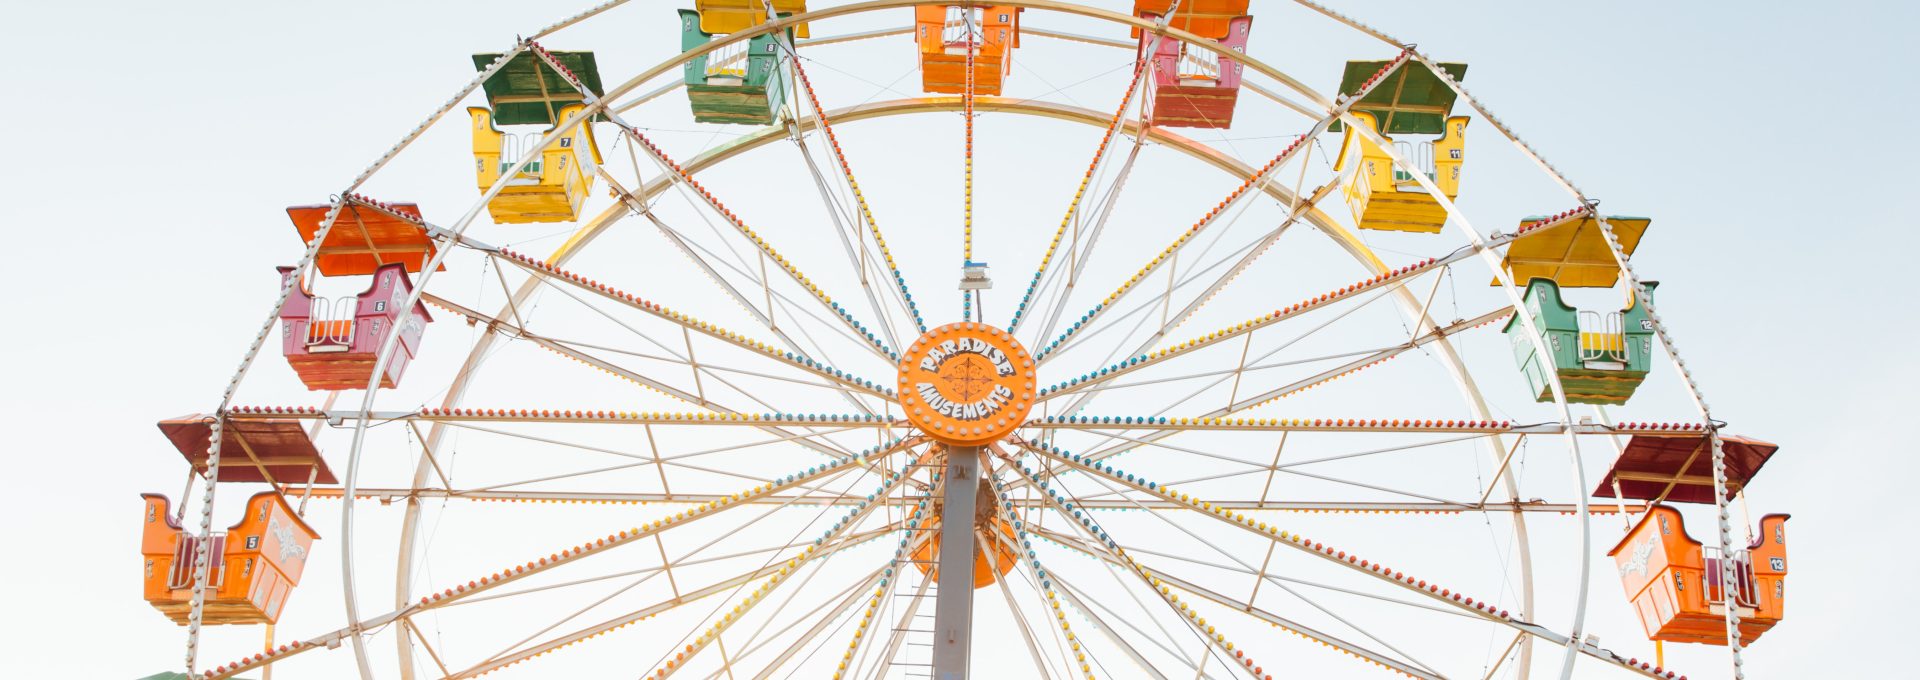 worm's eye view of red, orange, and yellow Ferris wheel